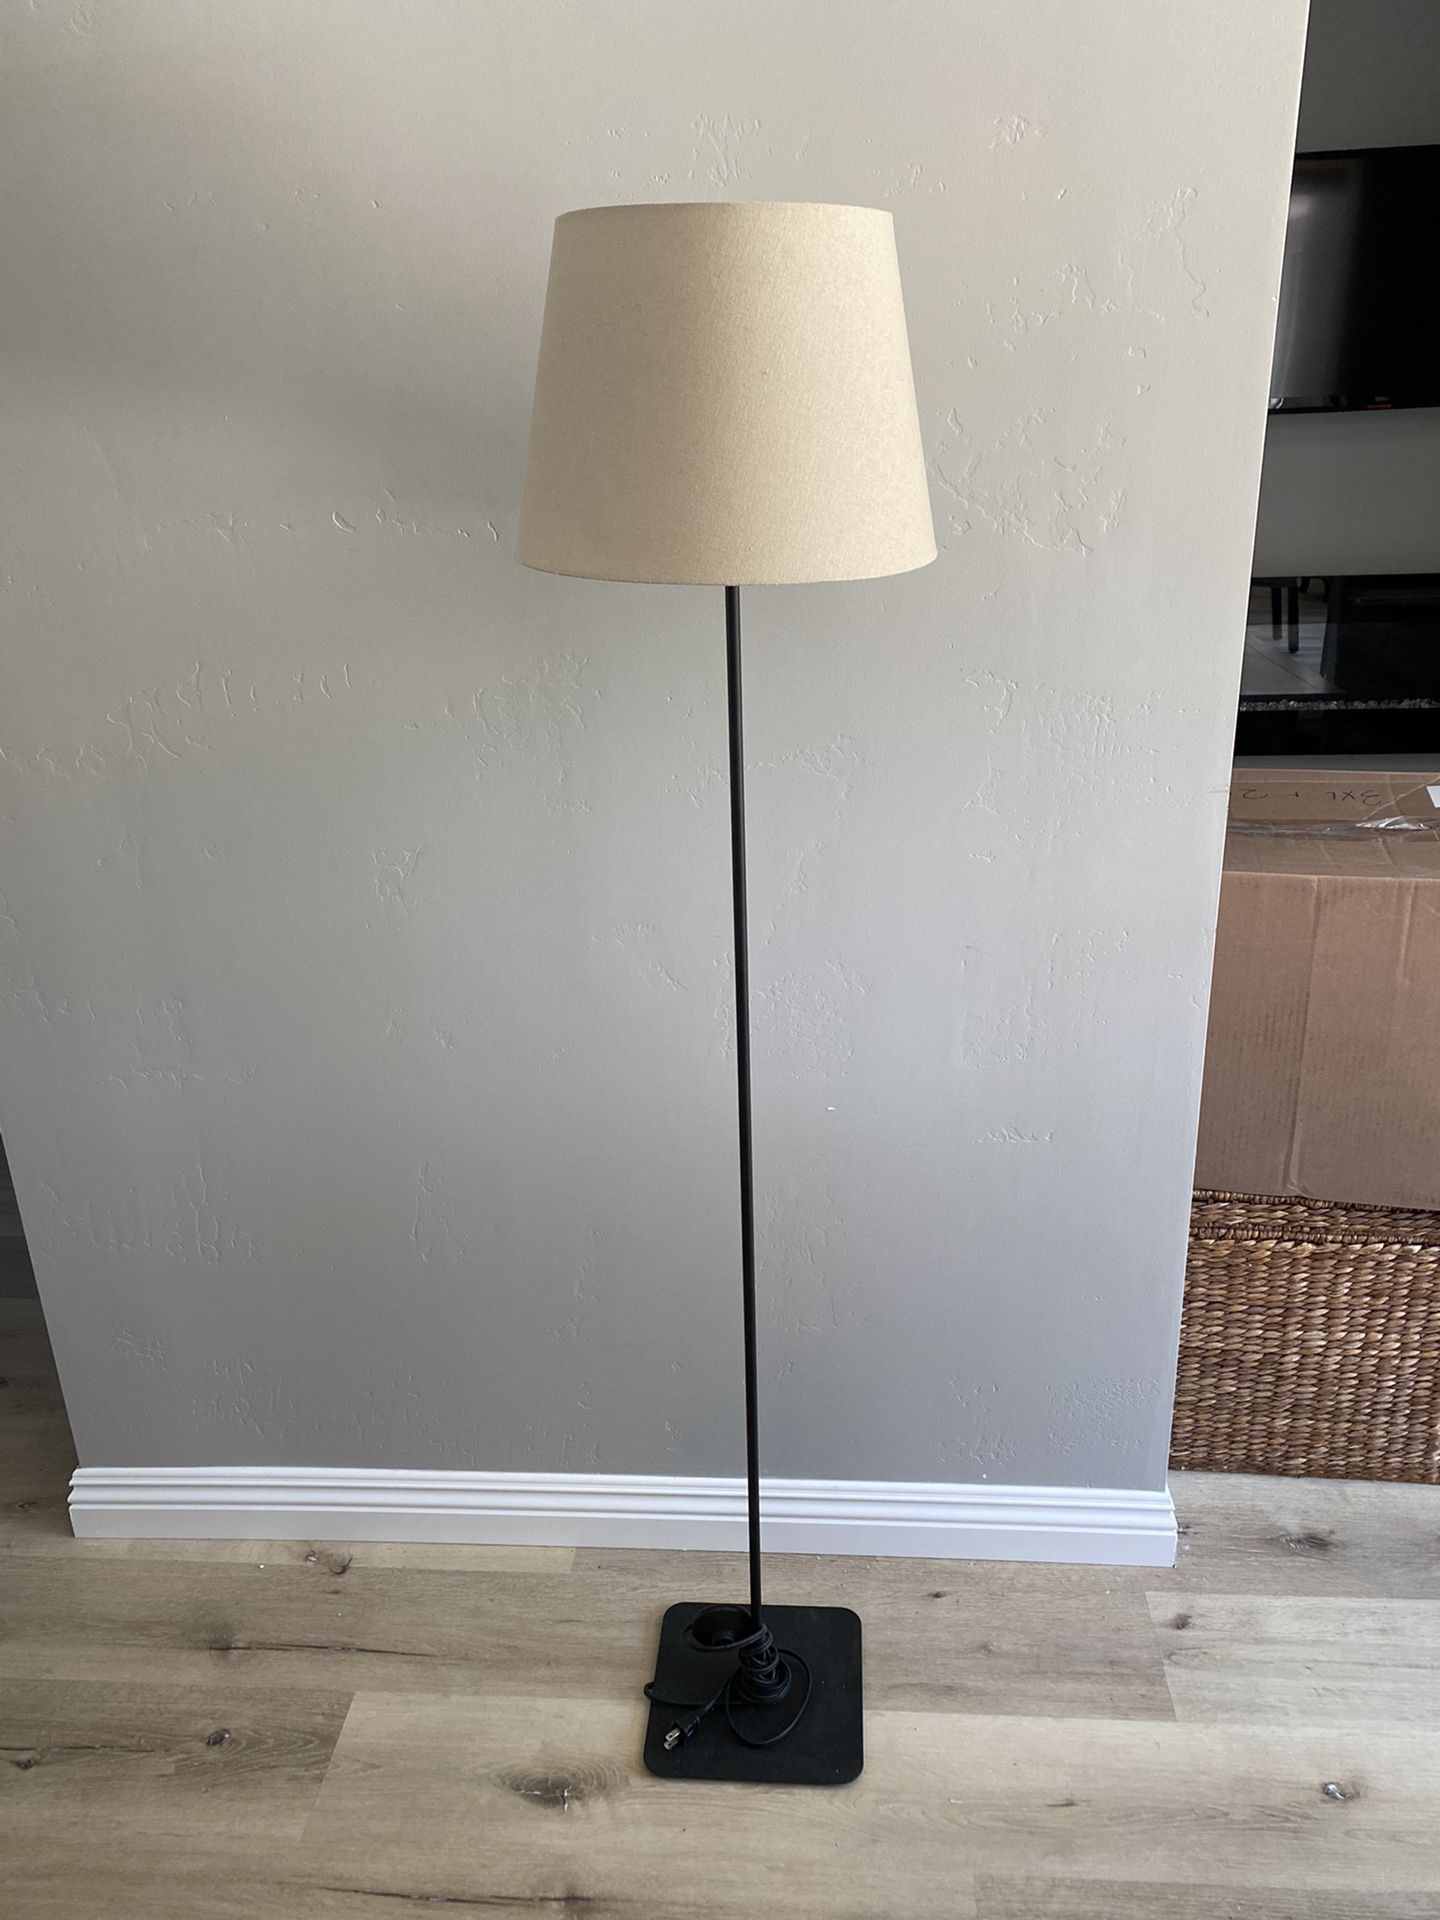 Floor lamp with khaki shade